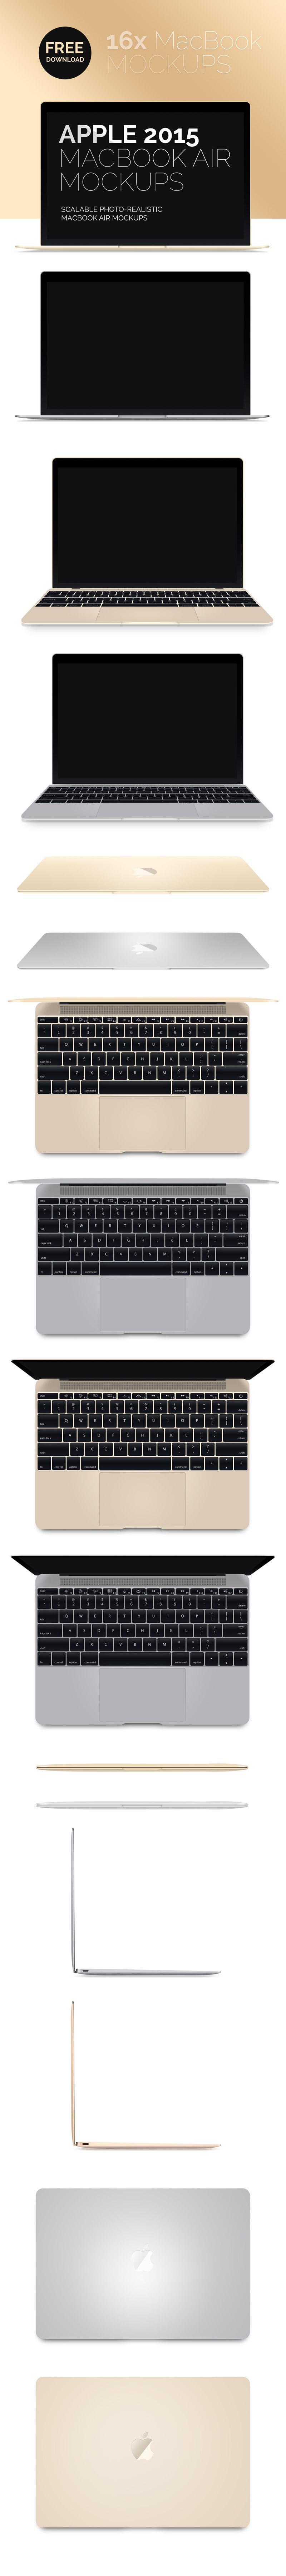 新款2015-MacBook-Air-Mockup